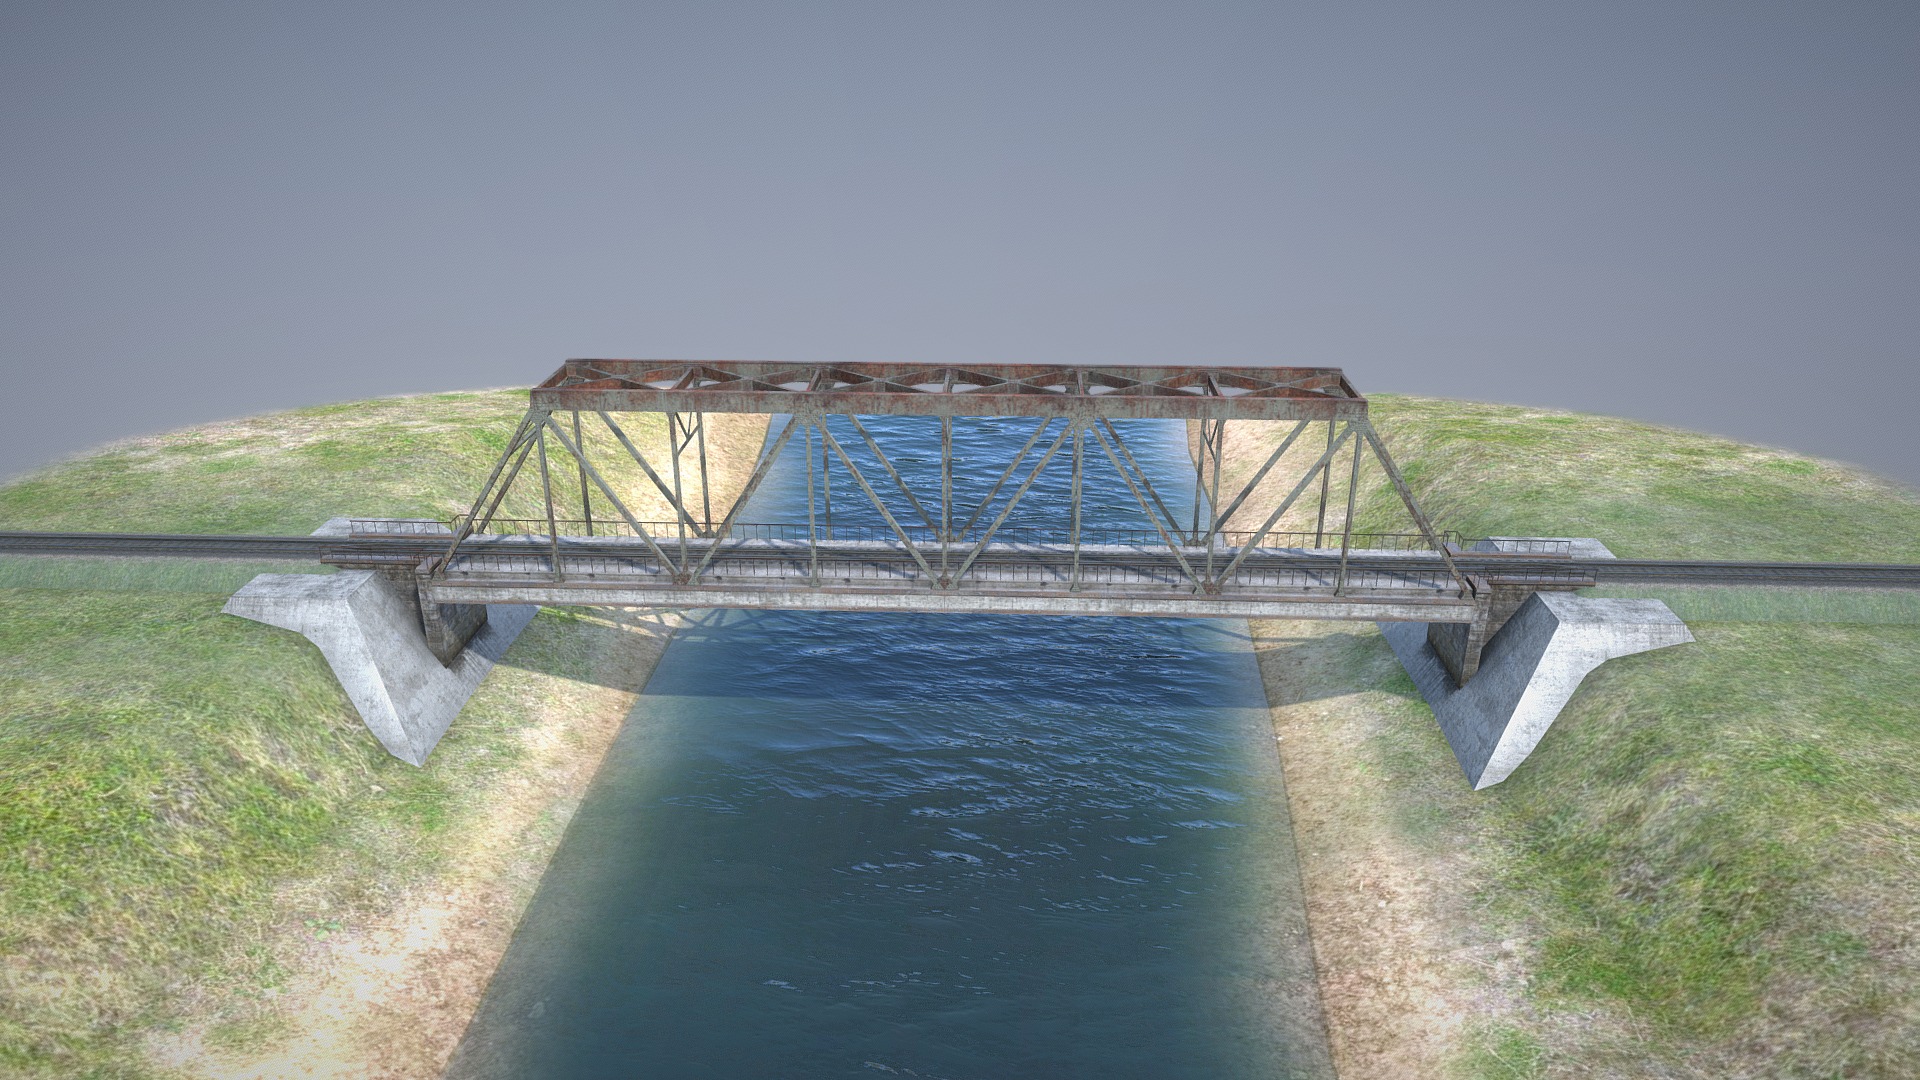 3D model RW Bridge Vologda-II Mono Ferma - This is a 3D model of the RW Bridge Vologda-II Mono Ferma. The 3D model is about a bridge over a body of water.